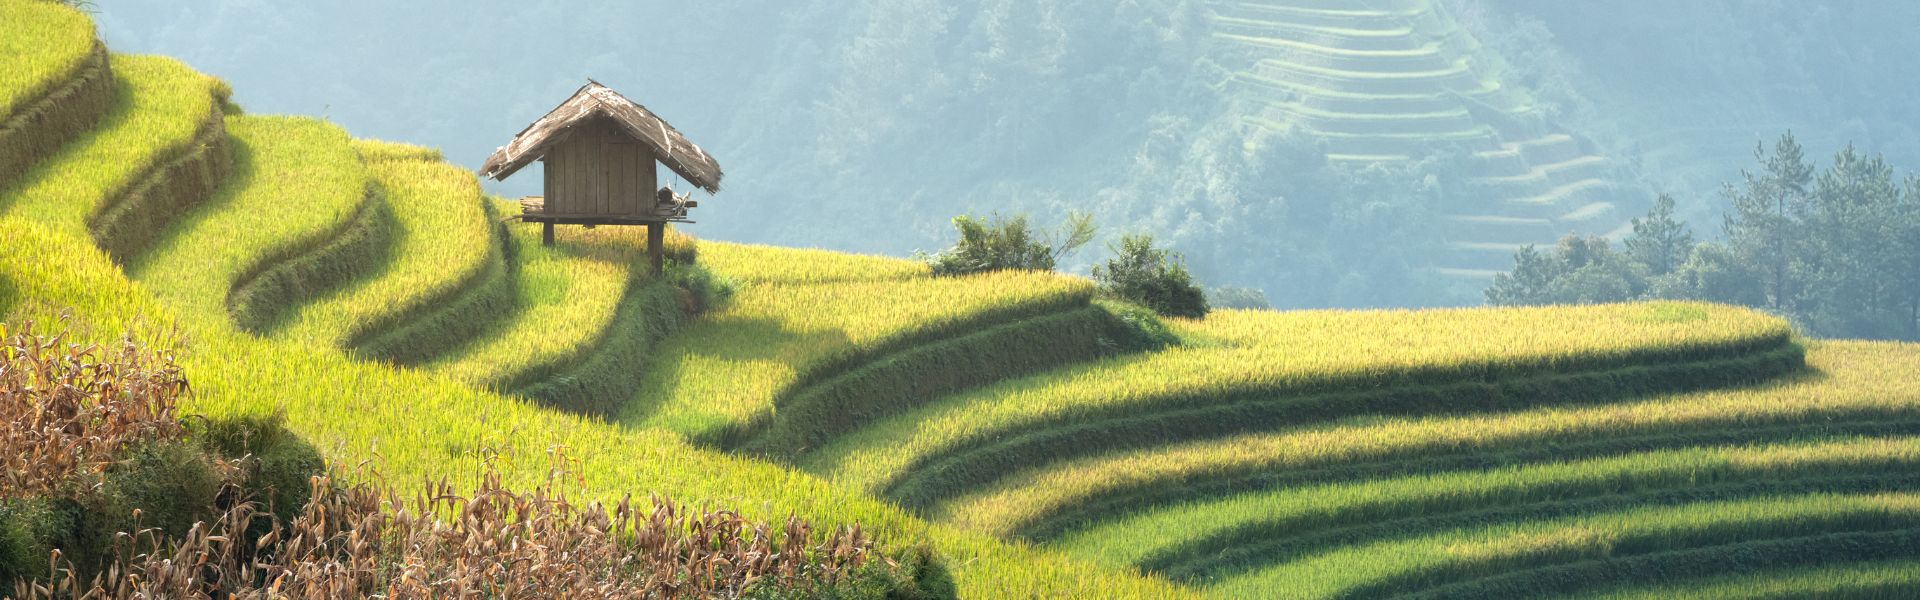 Mu Cang Chai - Consejos de viaje | Guía de viajes a Vietnam